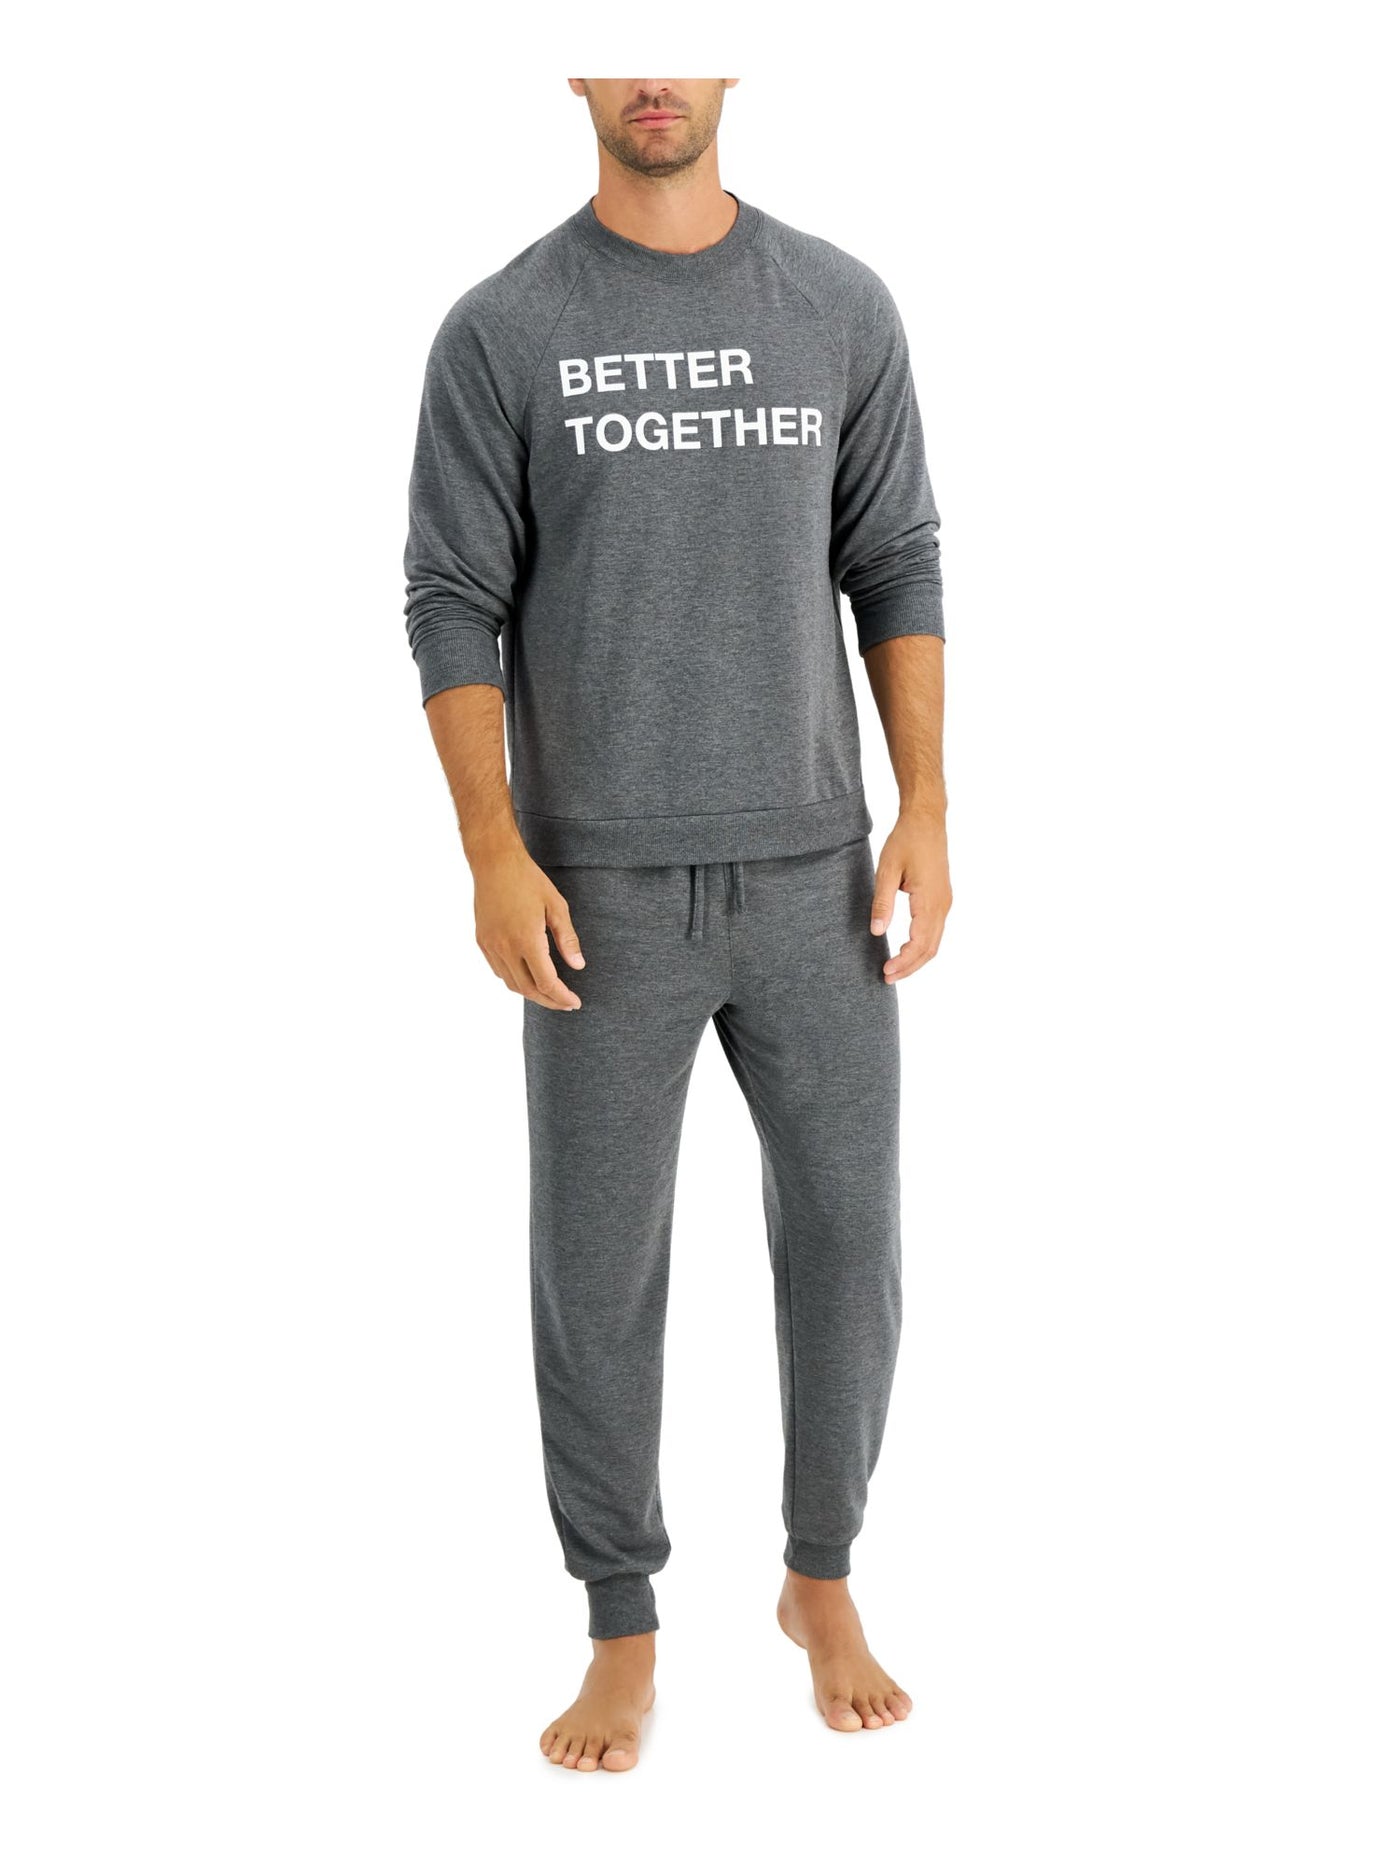 FAMILY PJs Mens Gray Graphic Drawstring T-Shirt Top Cuffed Pants Pajamas S